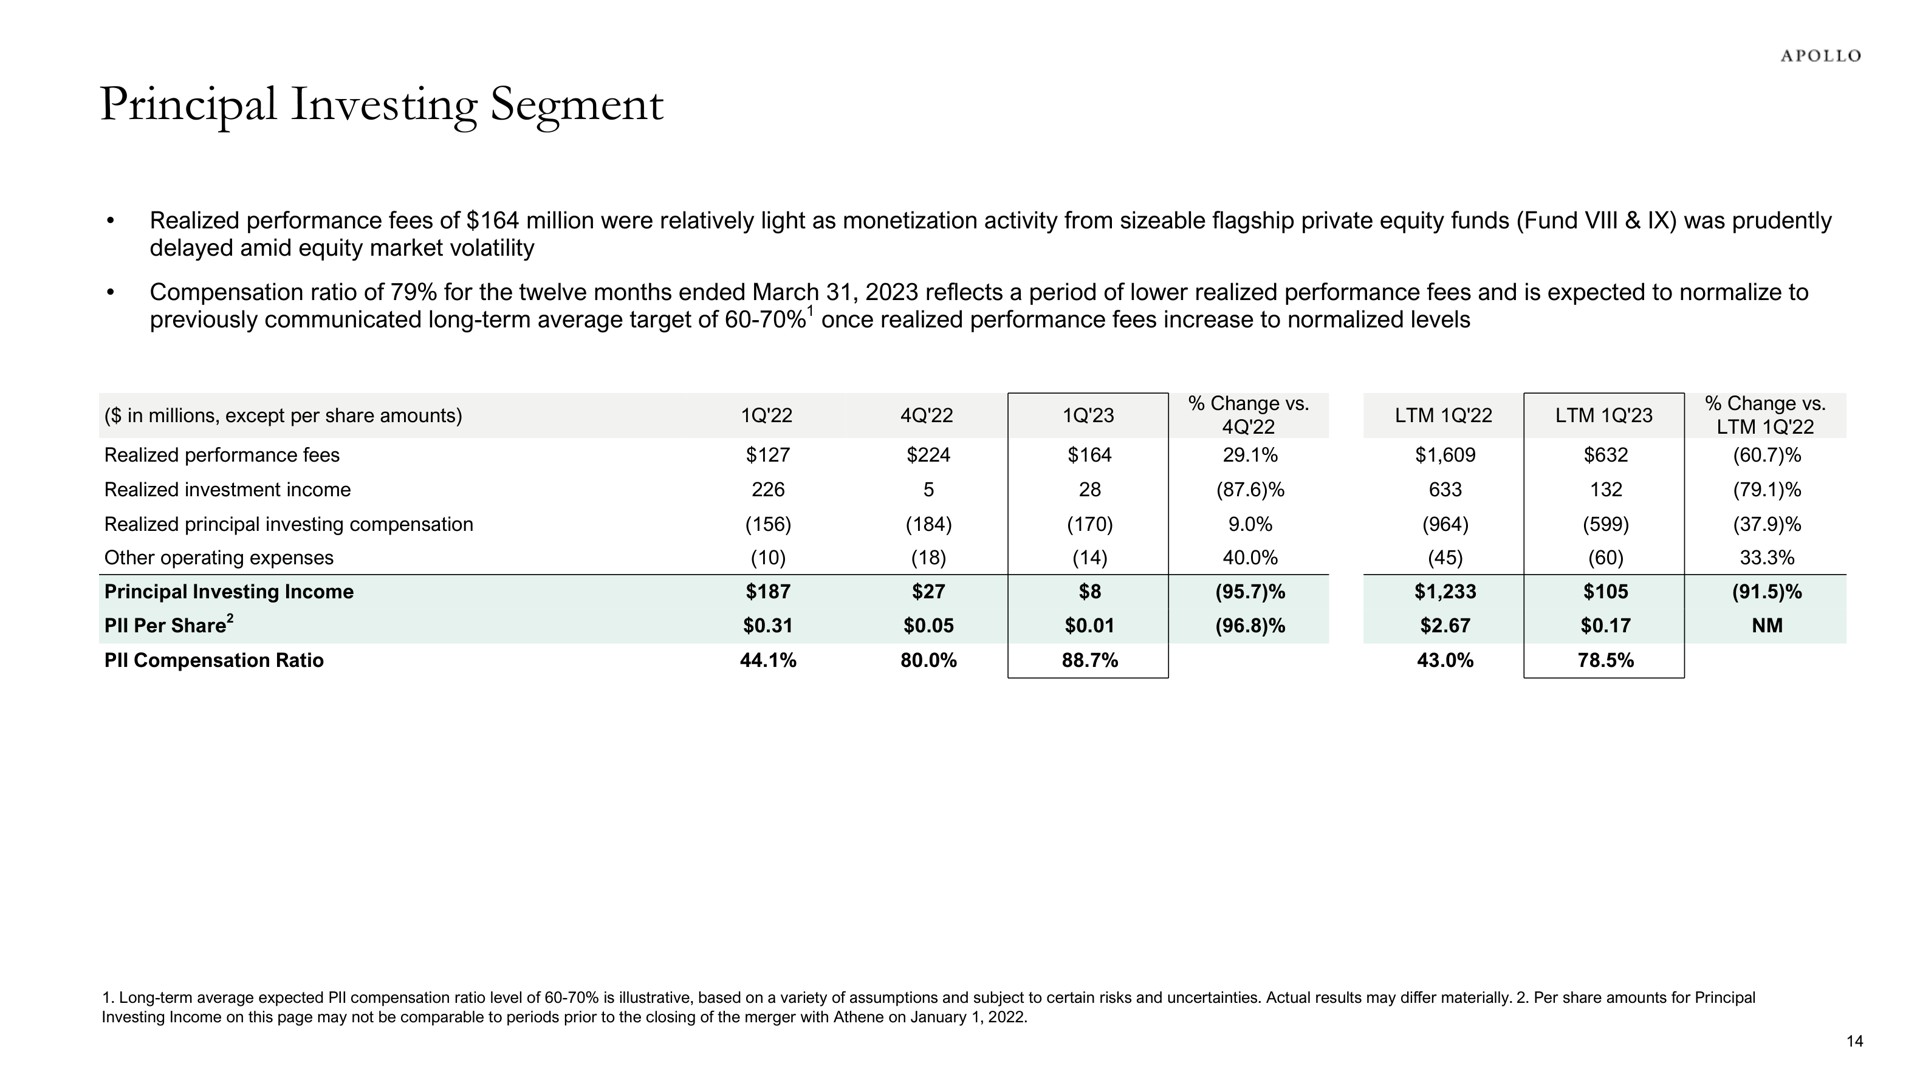 principal investing segment in millions except per share amounts bae nae | Apollo Global Management